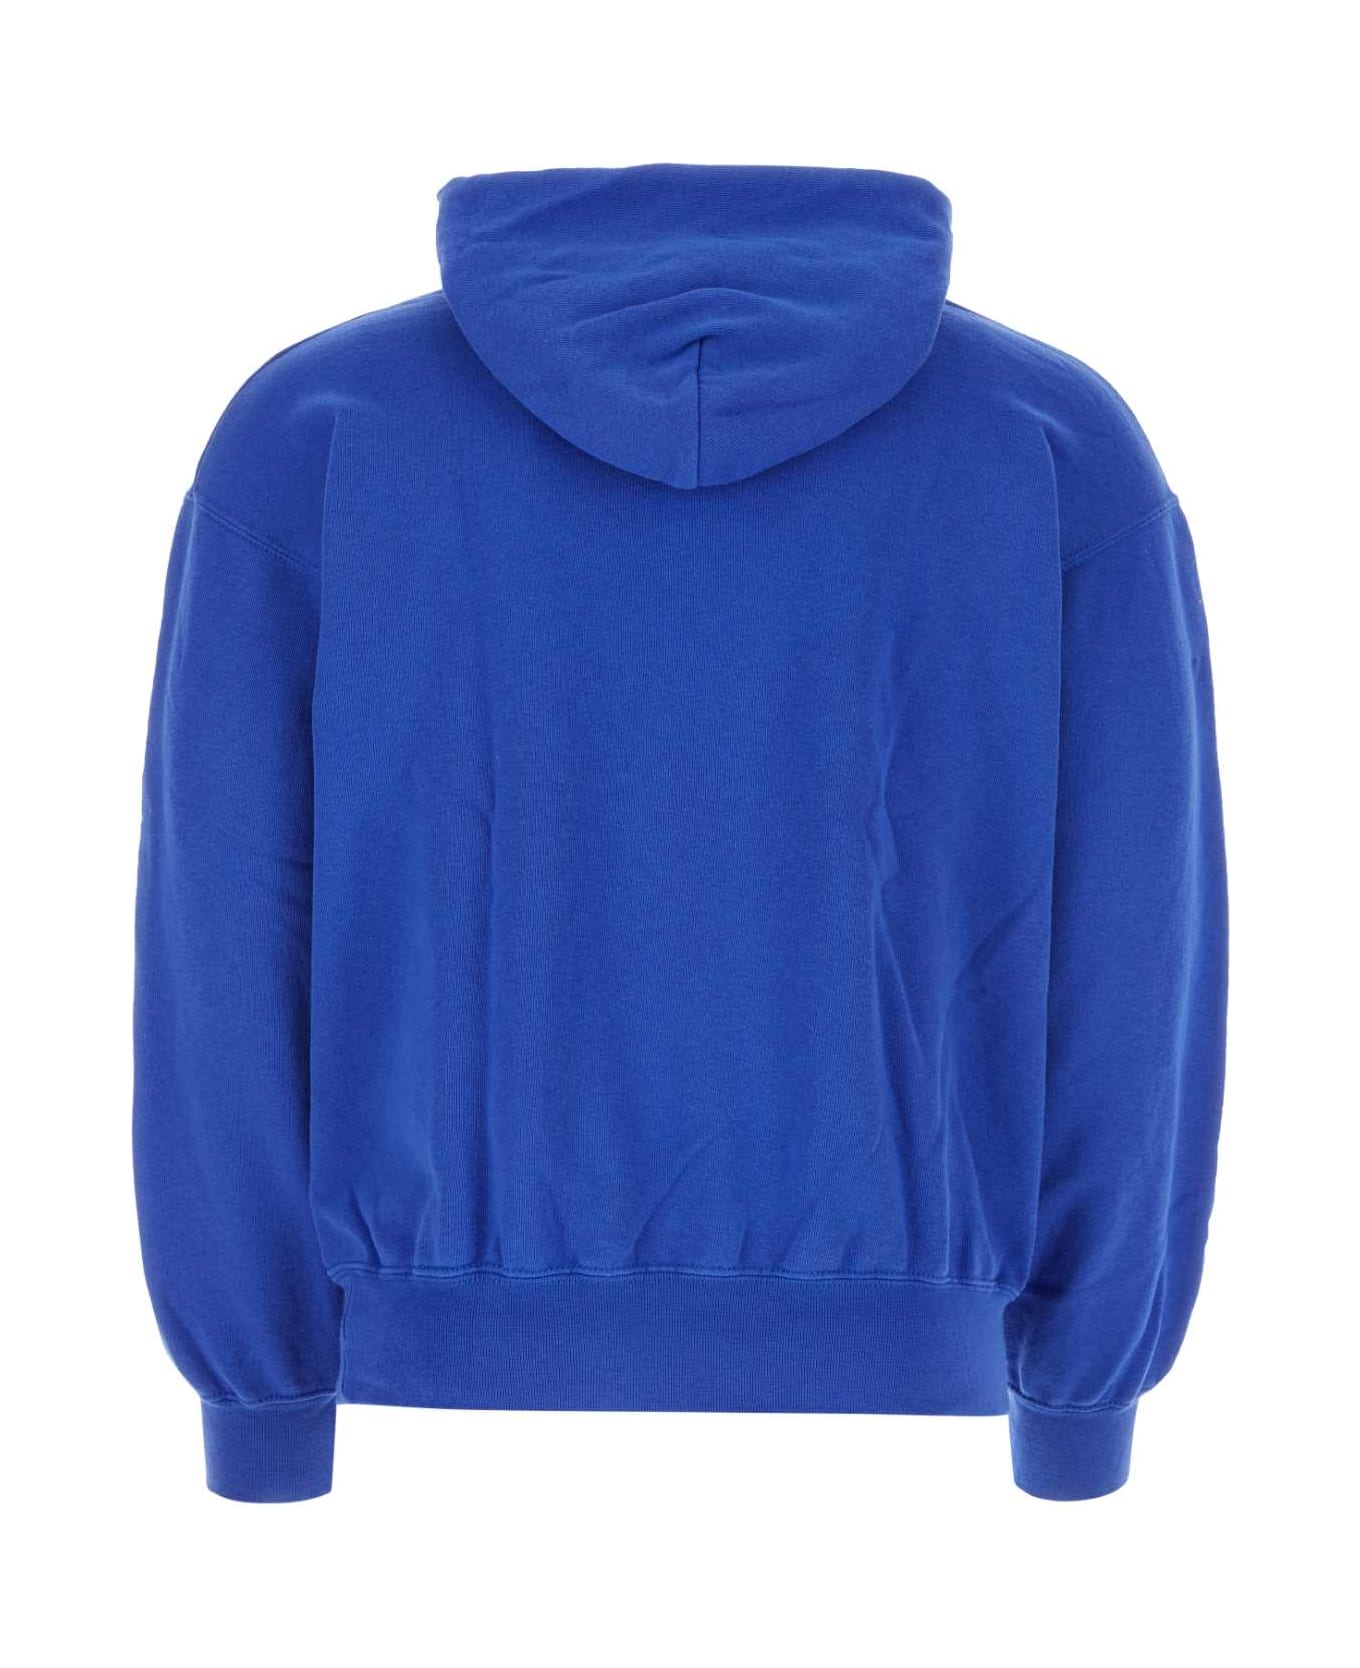 Wild Donkey Electric Blue Cotton Blend Sweatshirt - ROYBLU